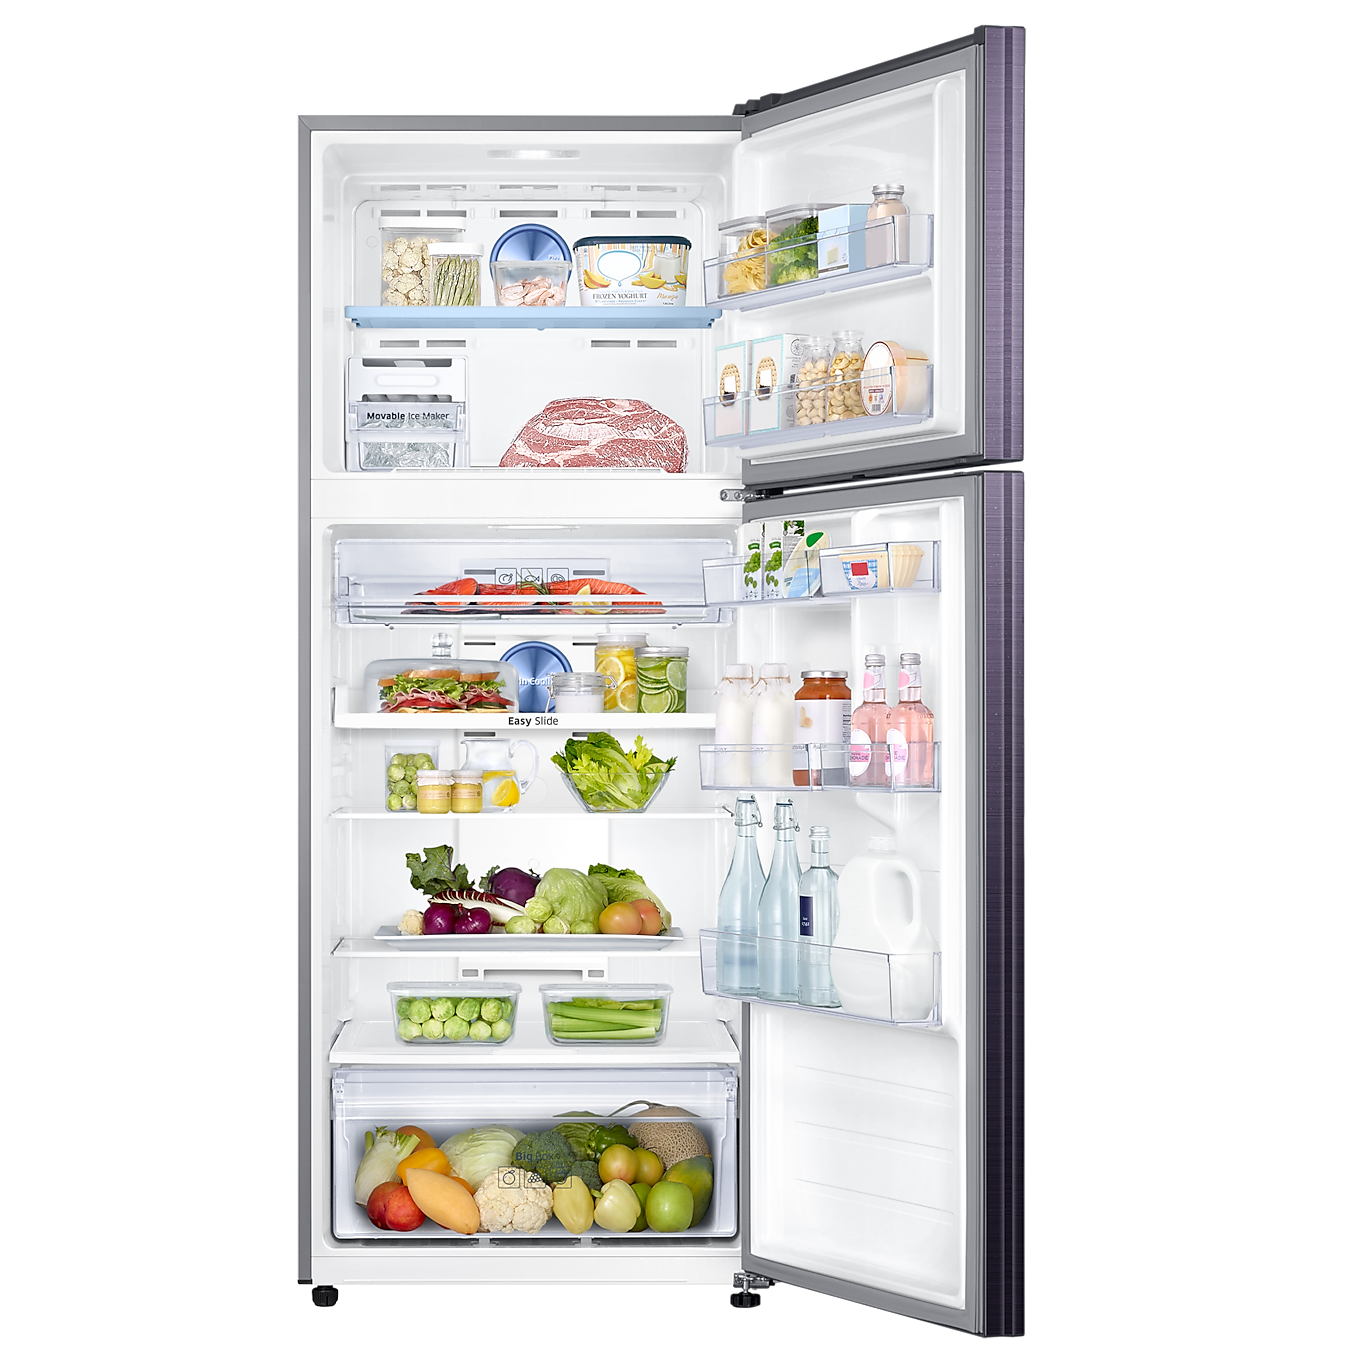 SAMSUNG 465 Liter Inverter Top Mount Refrigerator with 5 in 1 Convertible Mode RT47K6231UT/D3